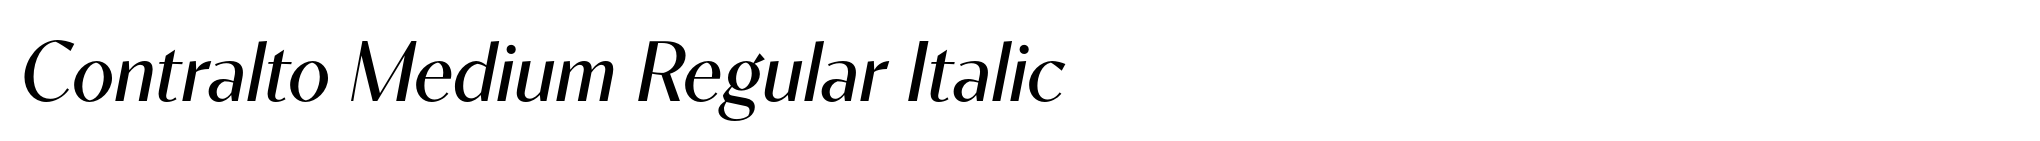 Contralto Medium Regular Italic image